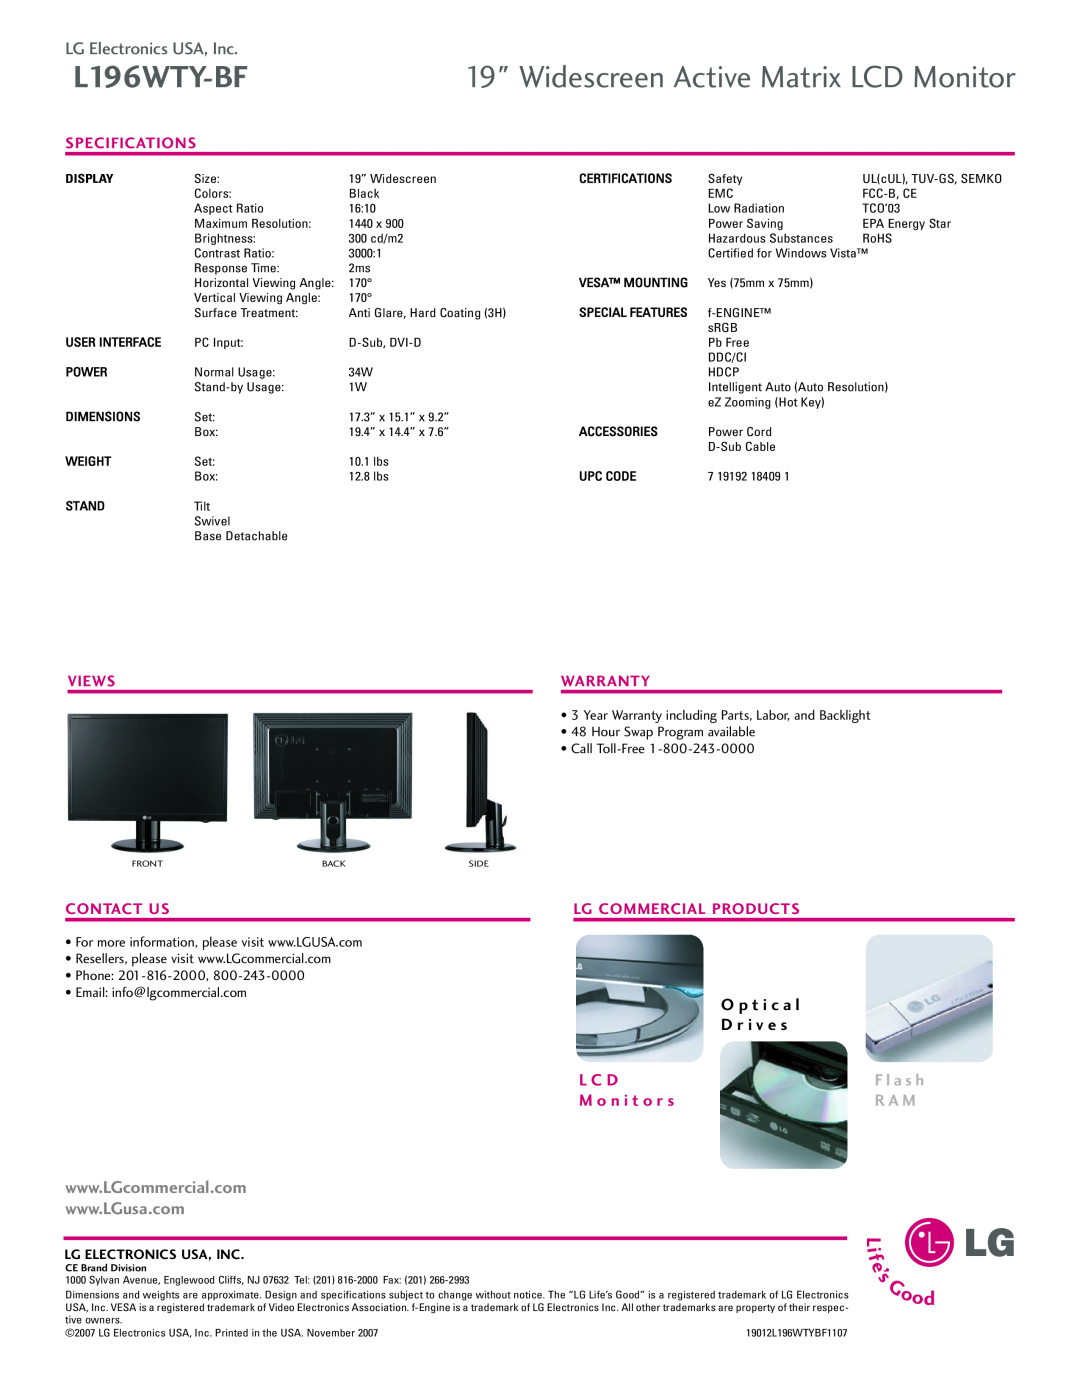 LG Electronics L196WTY-BF L C D, M o n i t o r s, Widescreen Active Matrix LCD Monitor, LG Electronics USA, Inc, R A M 